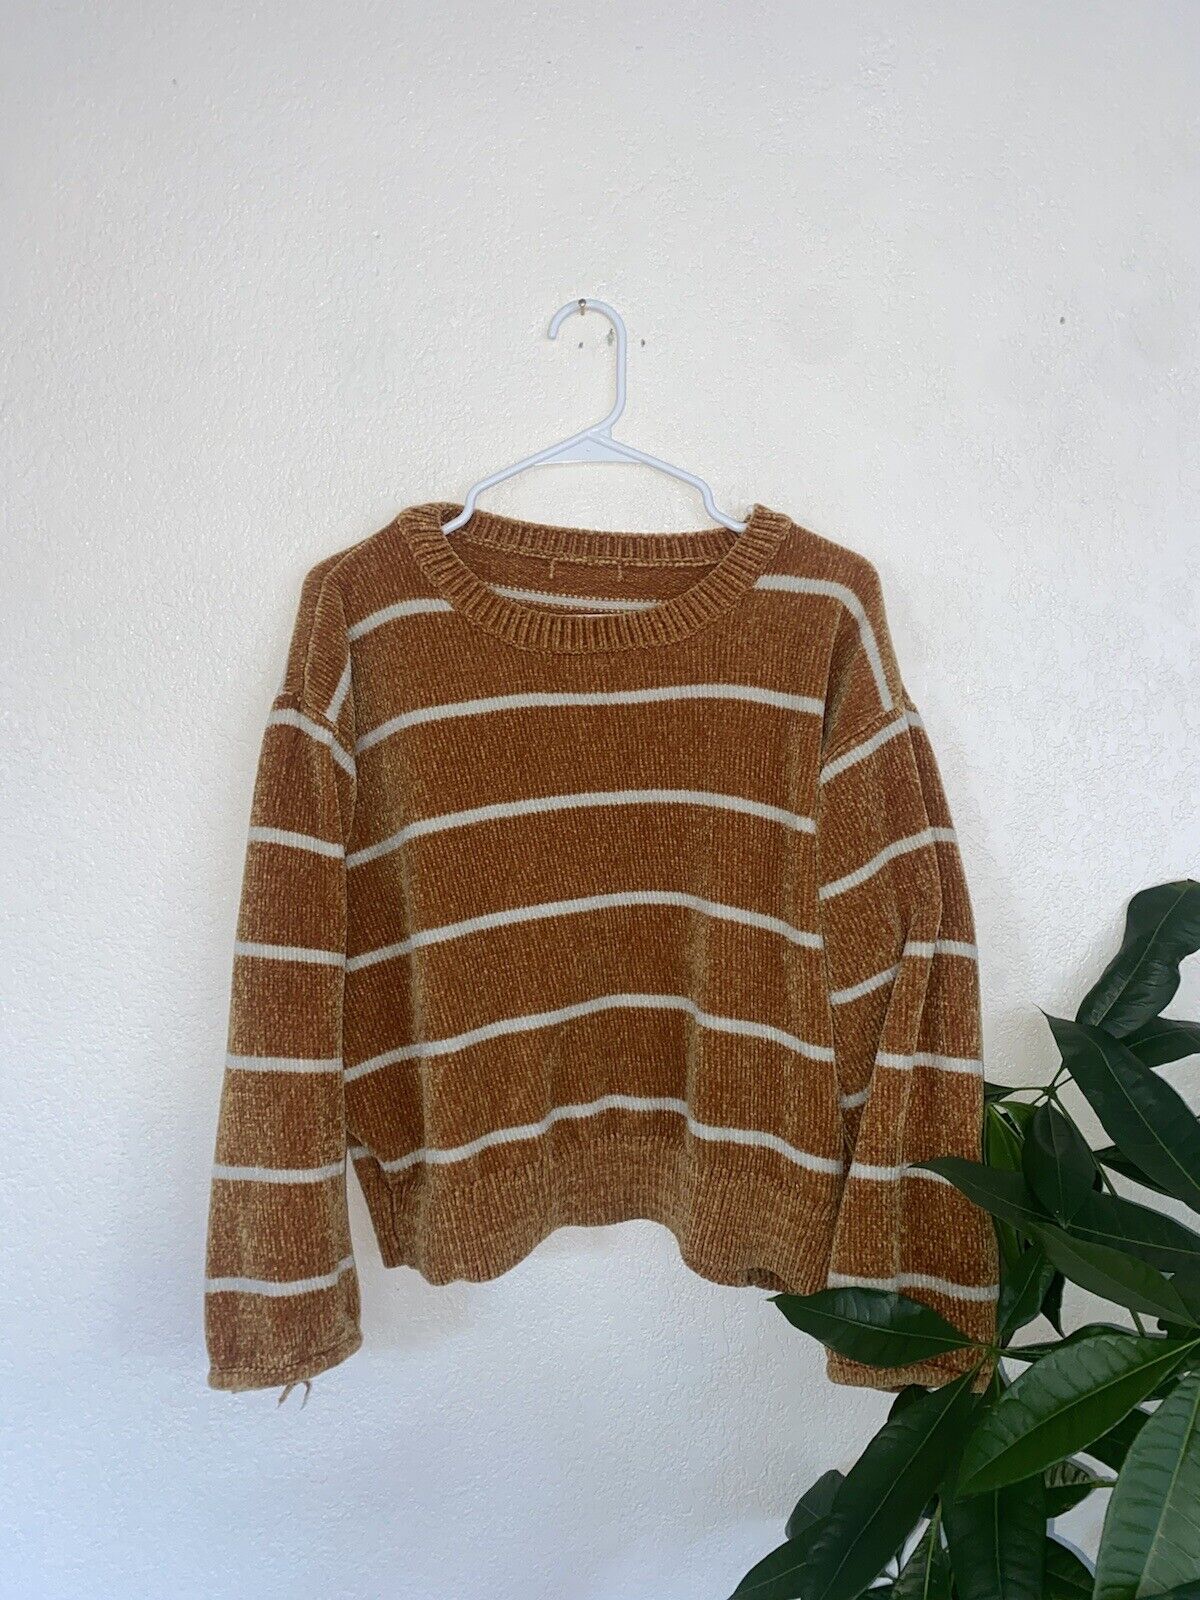 Orange Stripe Sweater - Unbranded - Size Medium  # 1924